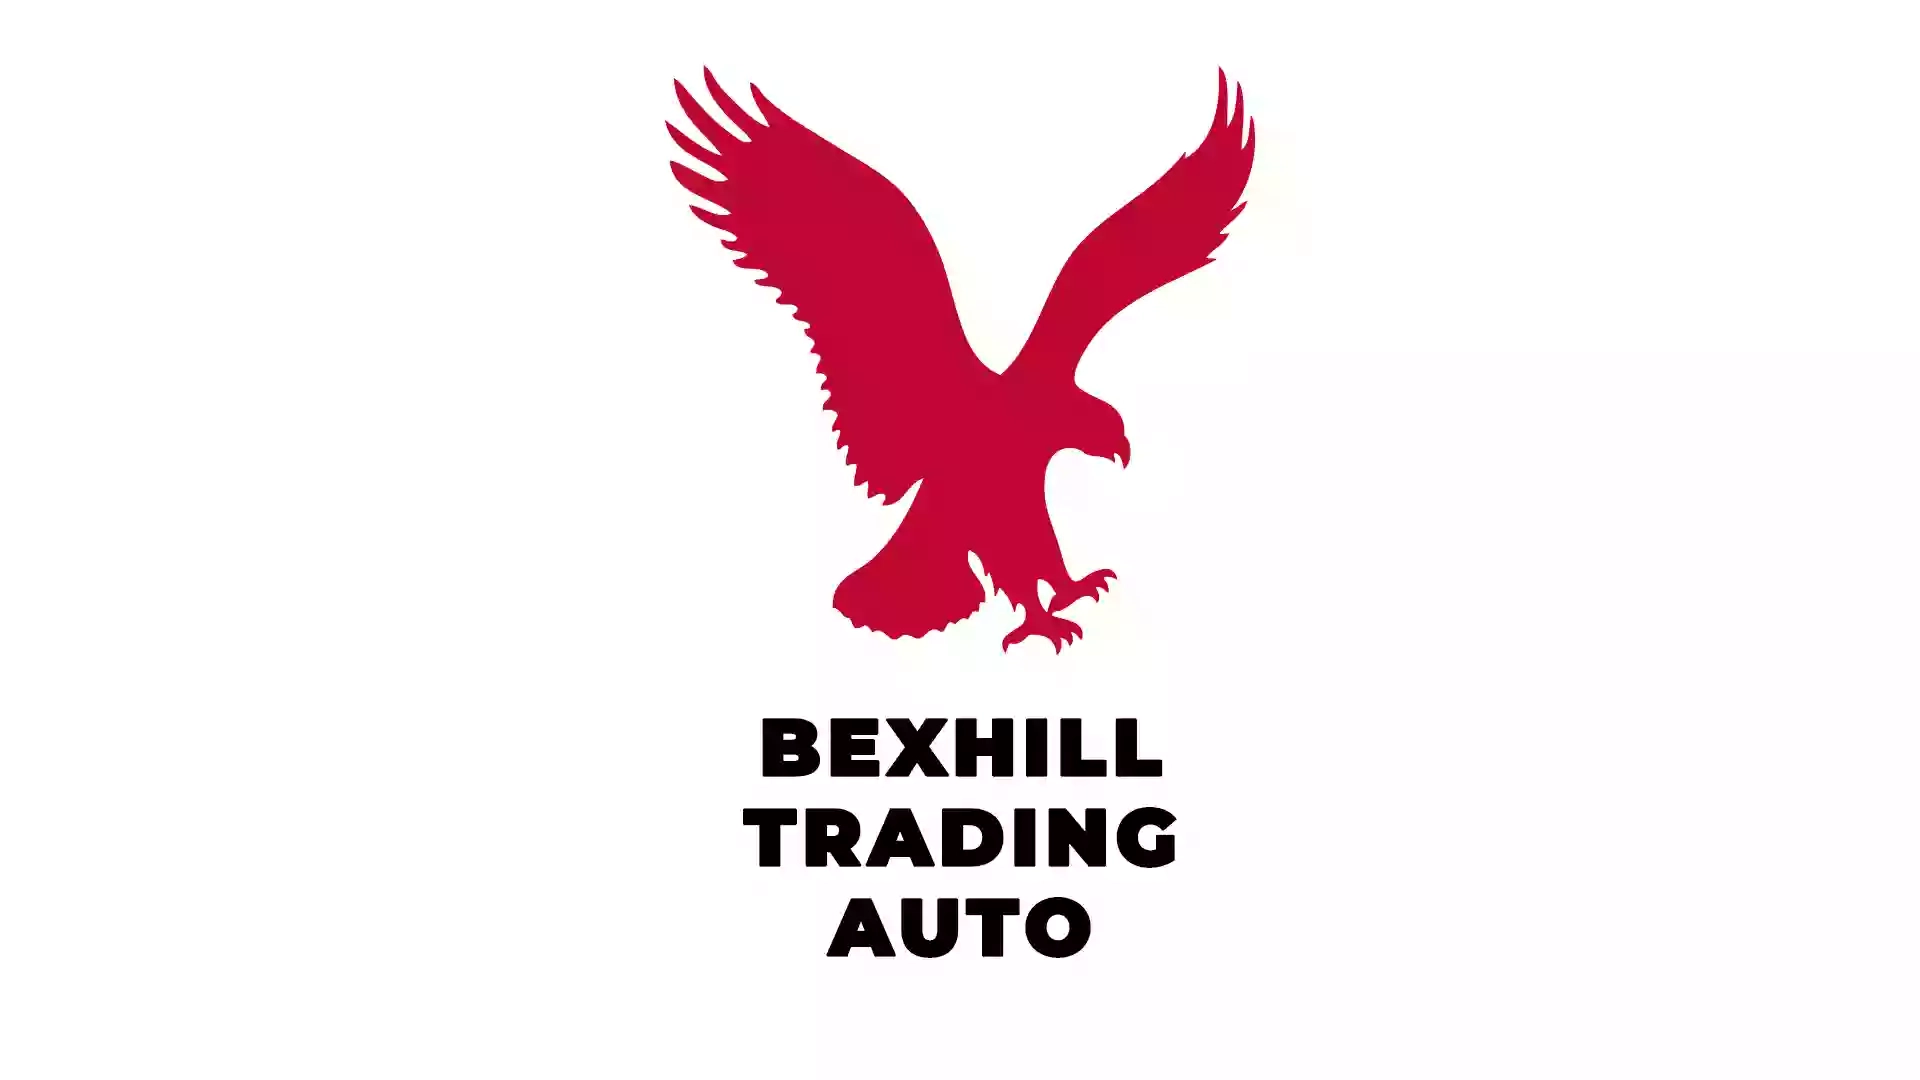 Bexhill Trading Auto Одесса. Авто из США